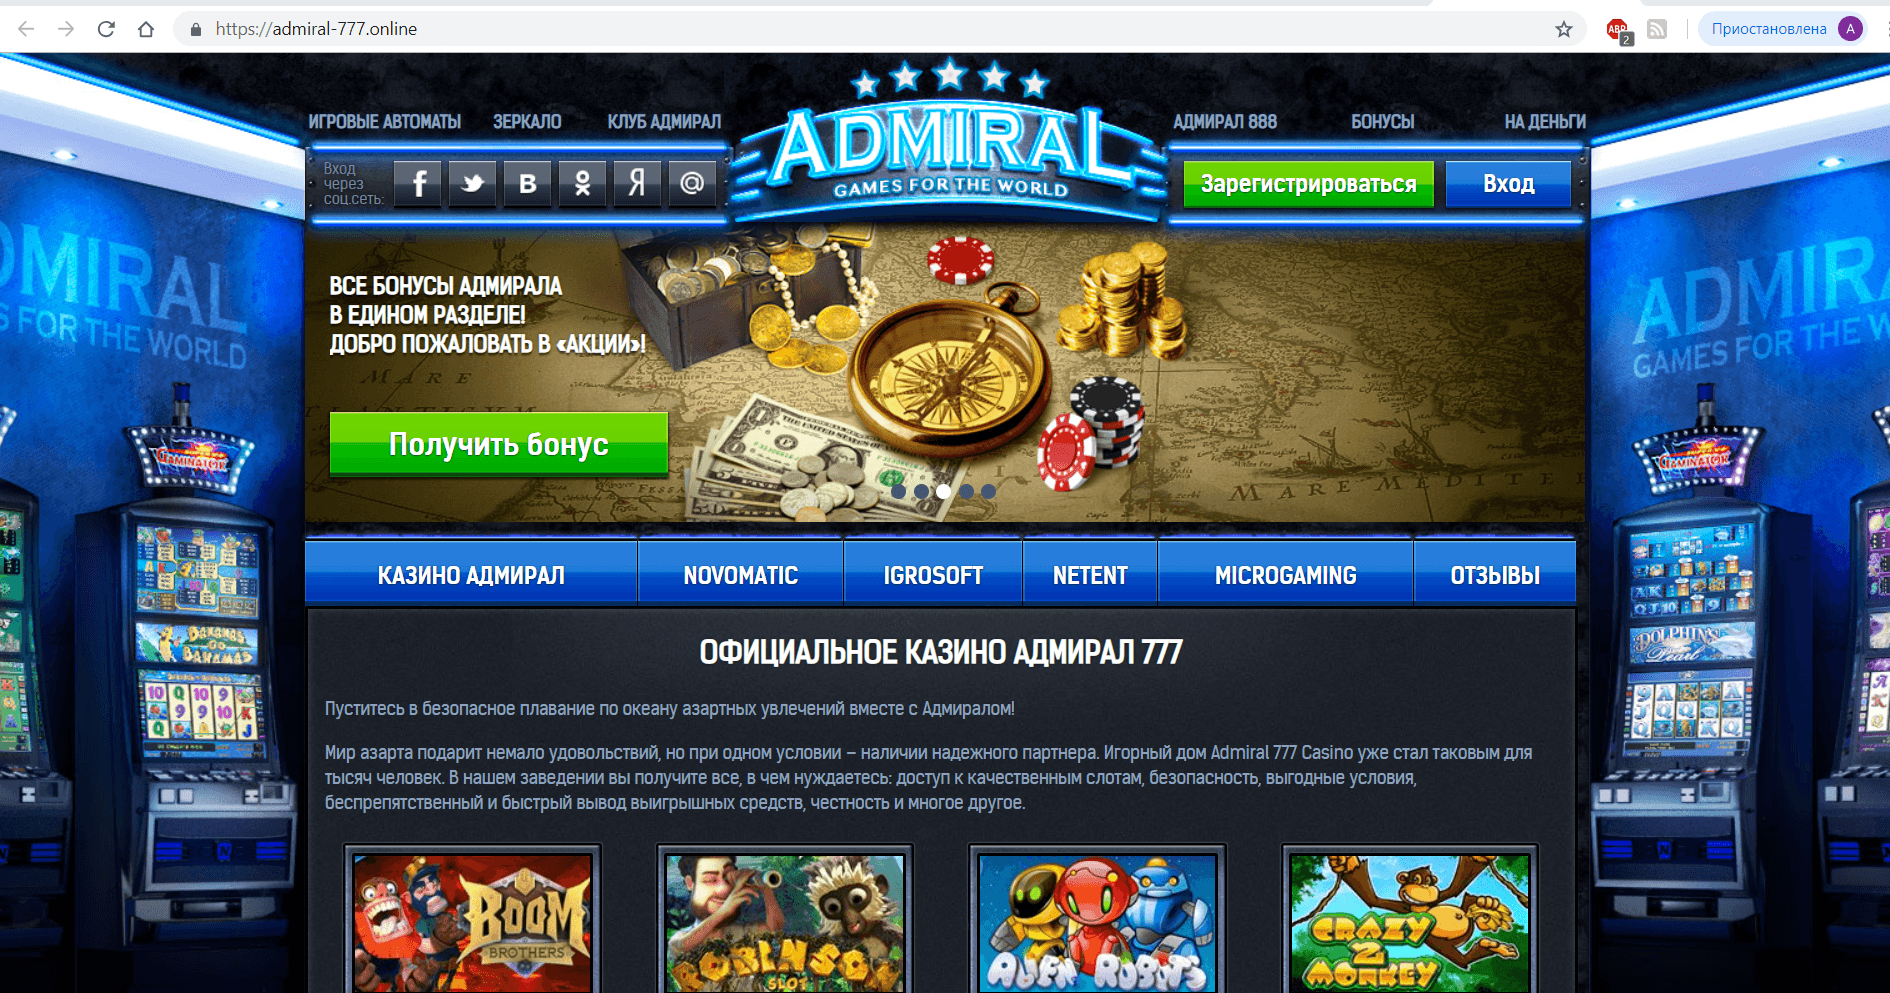 Best online casino uk askgamblers